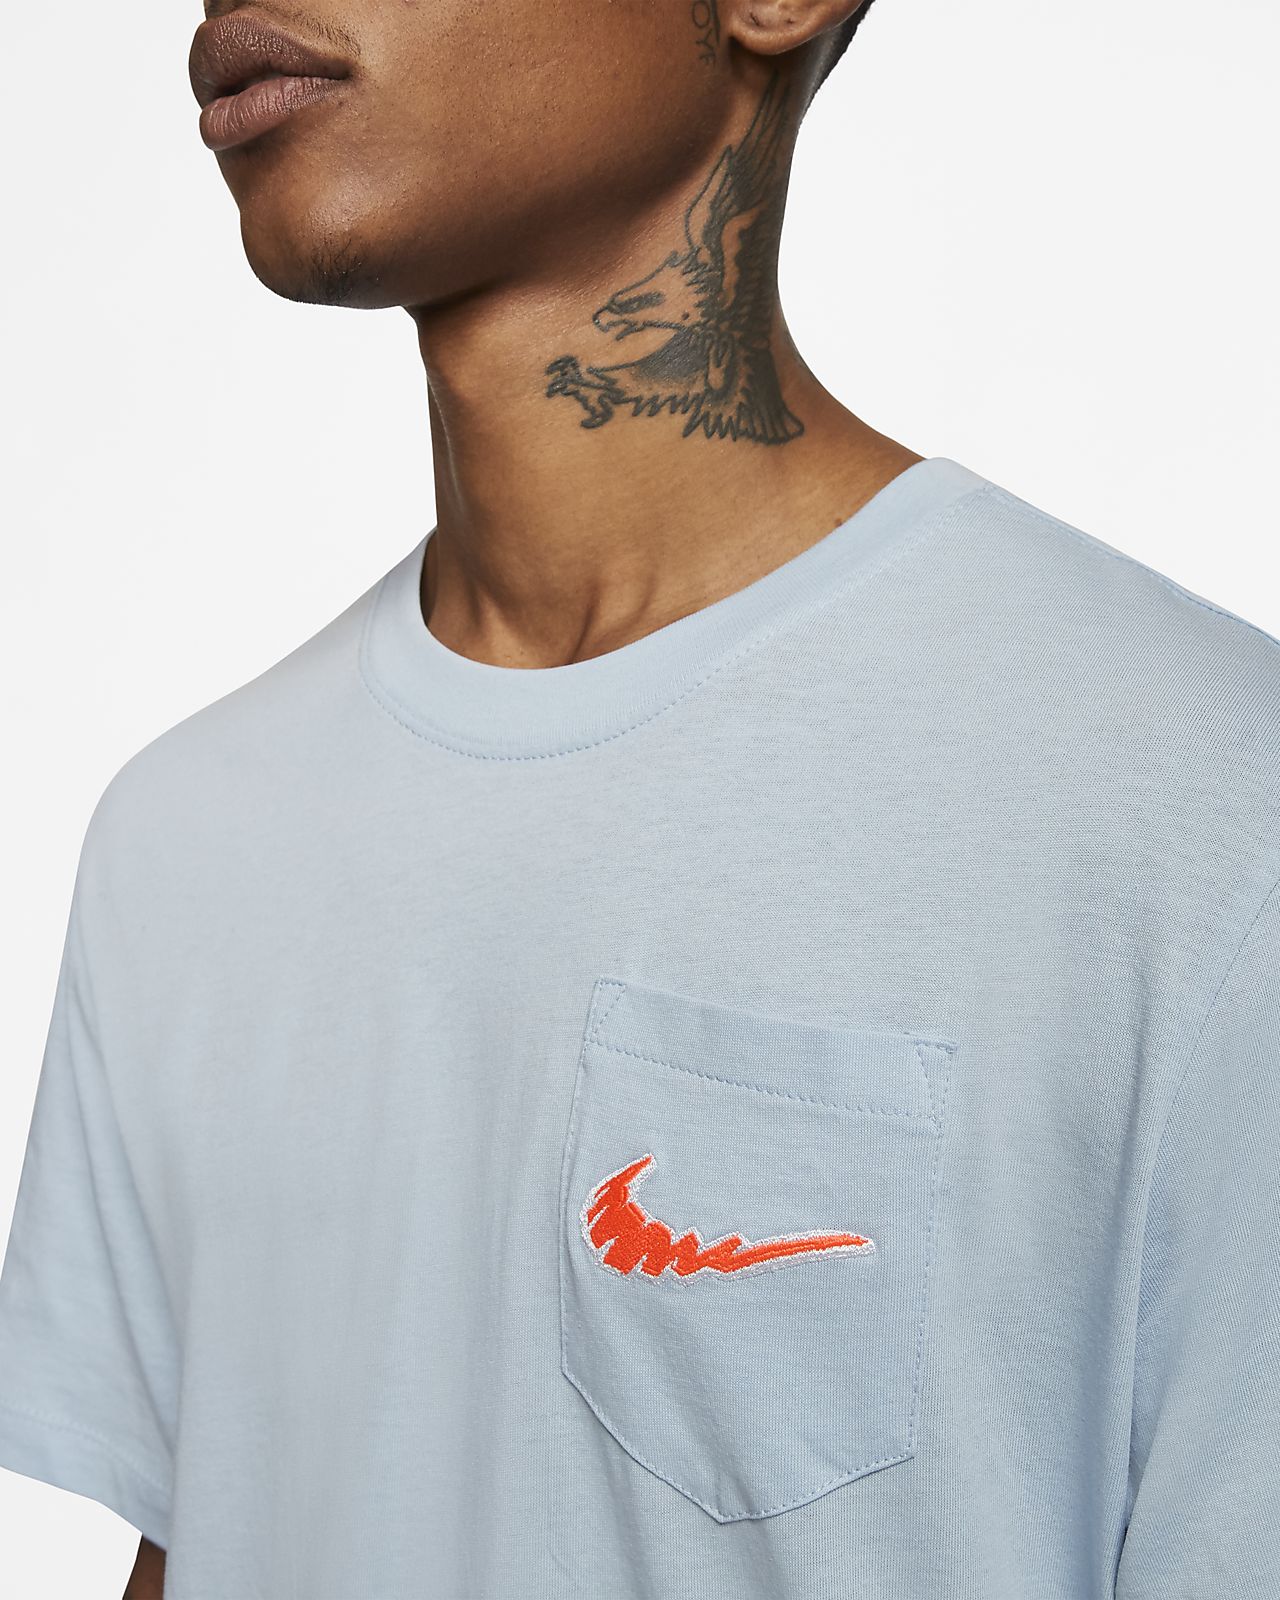 Nike公式 ナイキ Sb メンズ スケート Tシャツ オンラインストア 通販